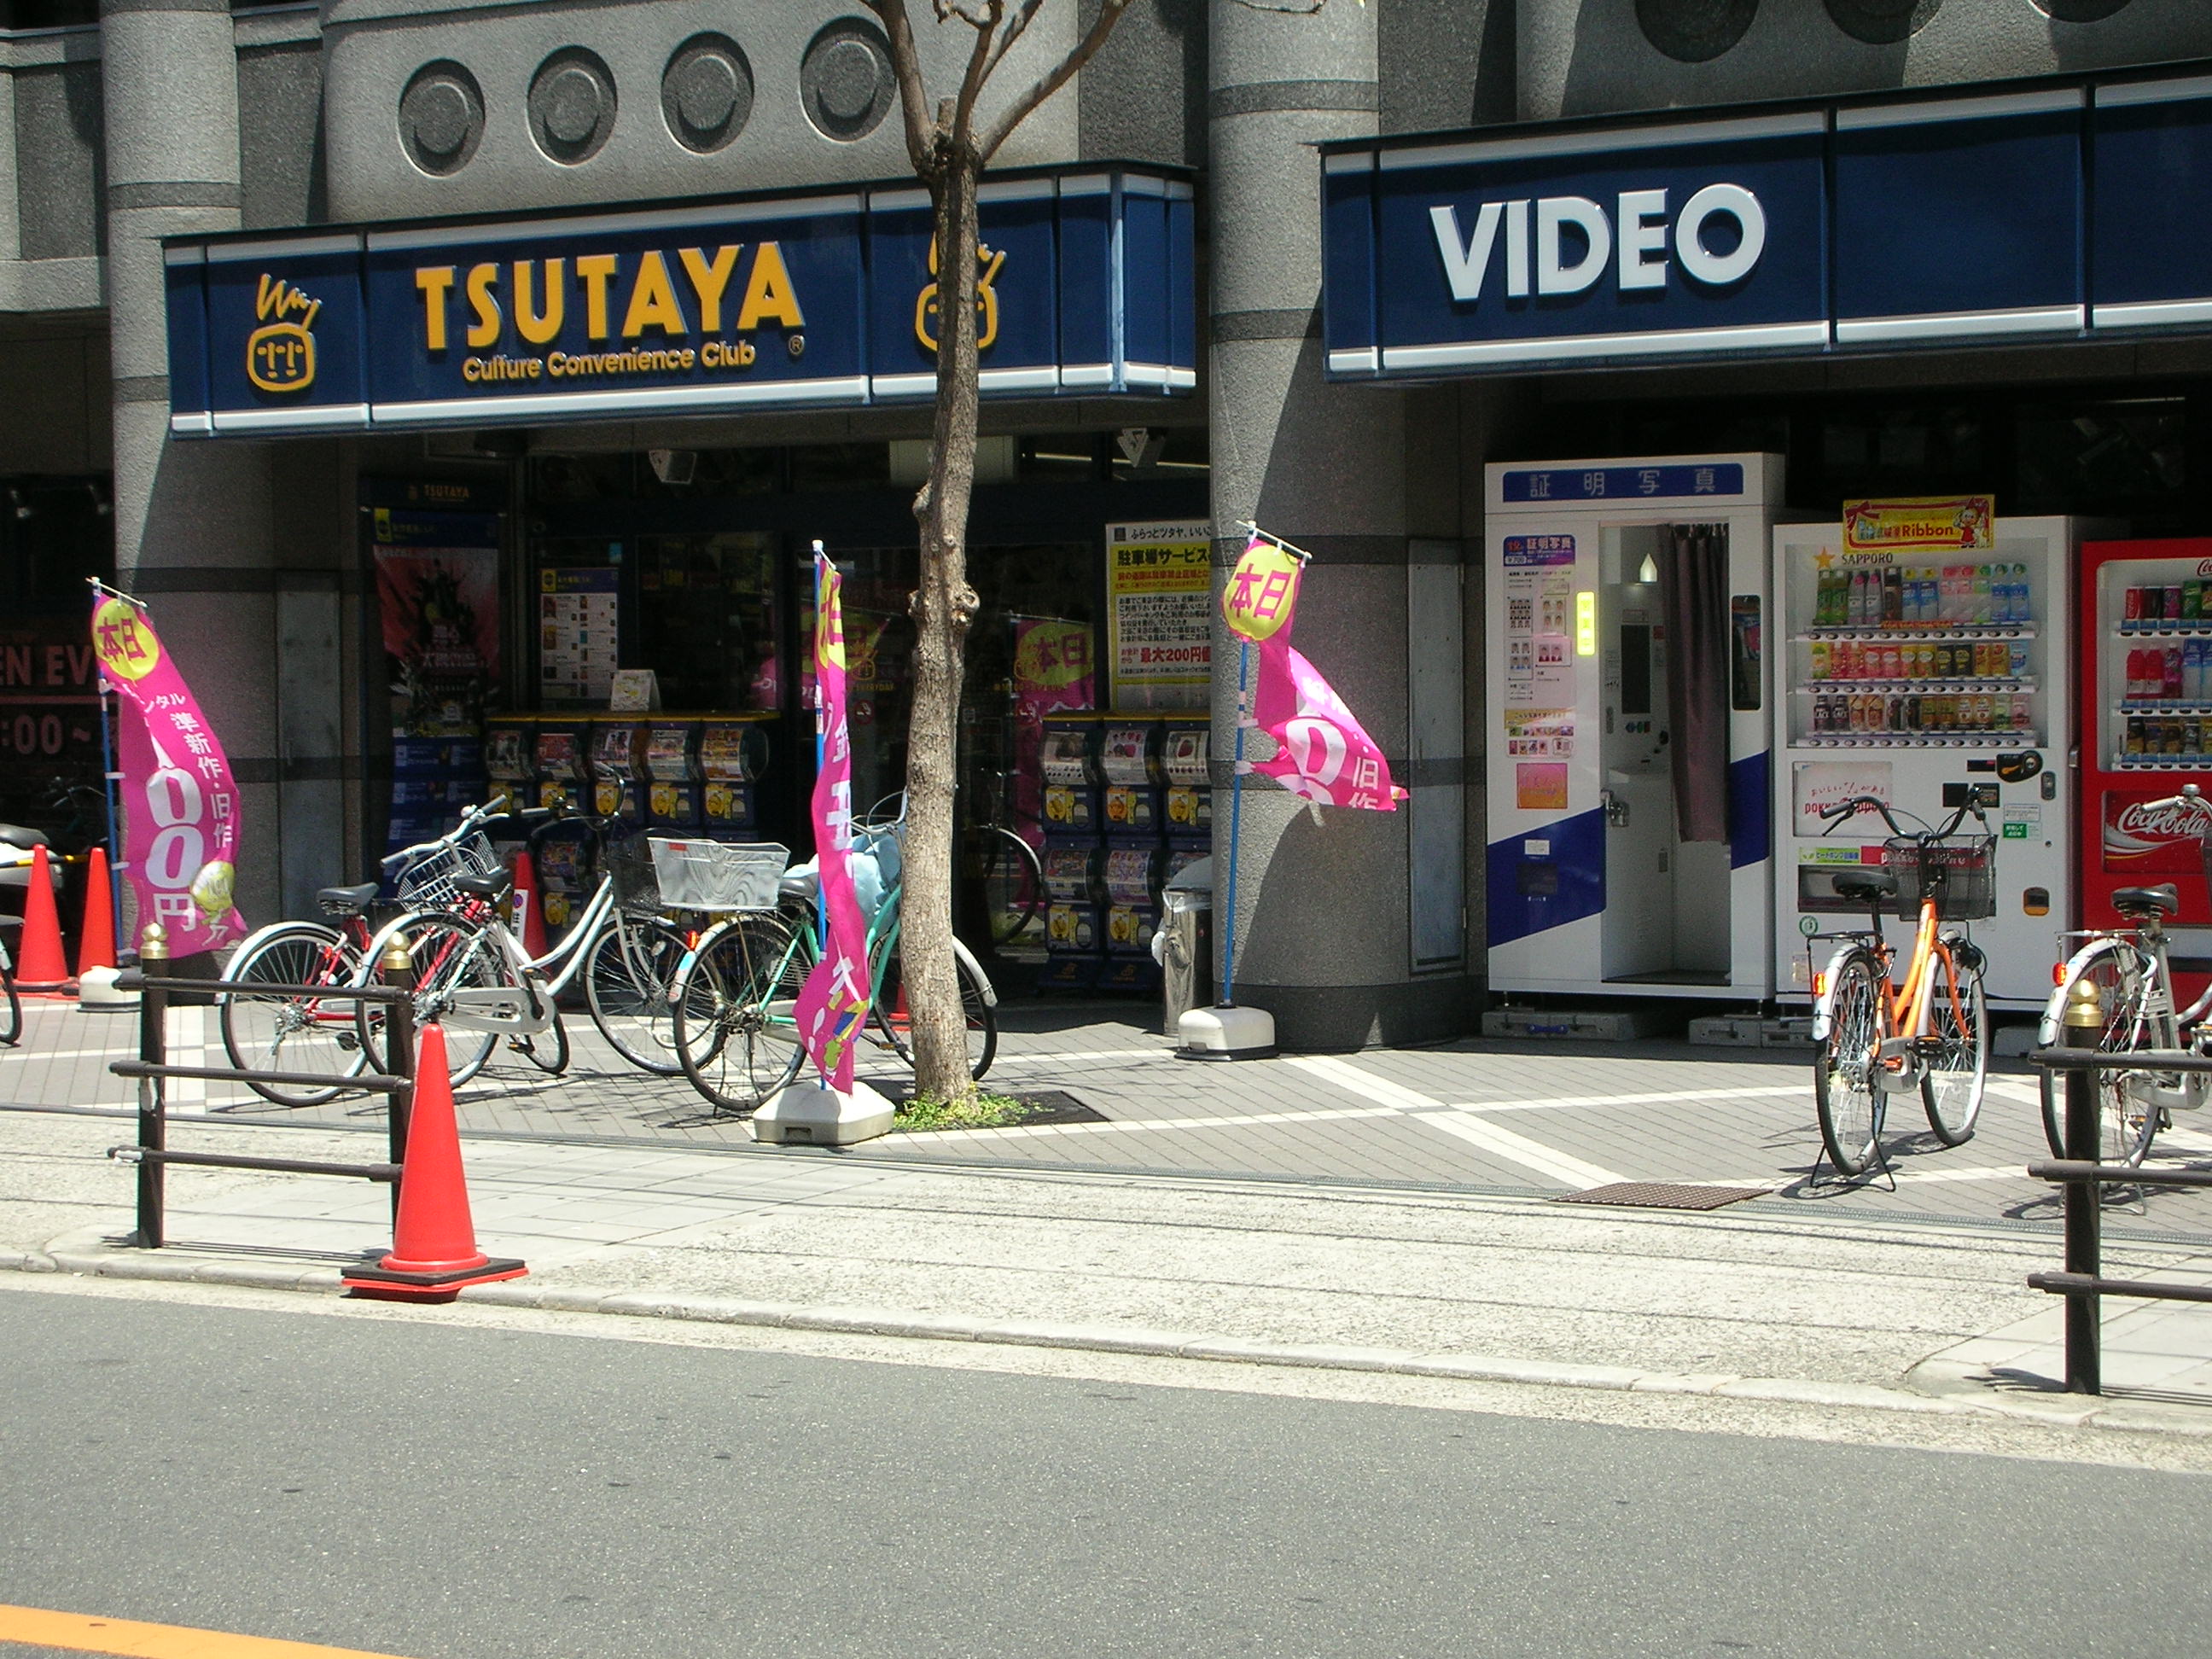 Rental video. TSUTAYA Kami Shinjo shop 612m up (video rental)